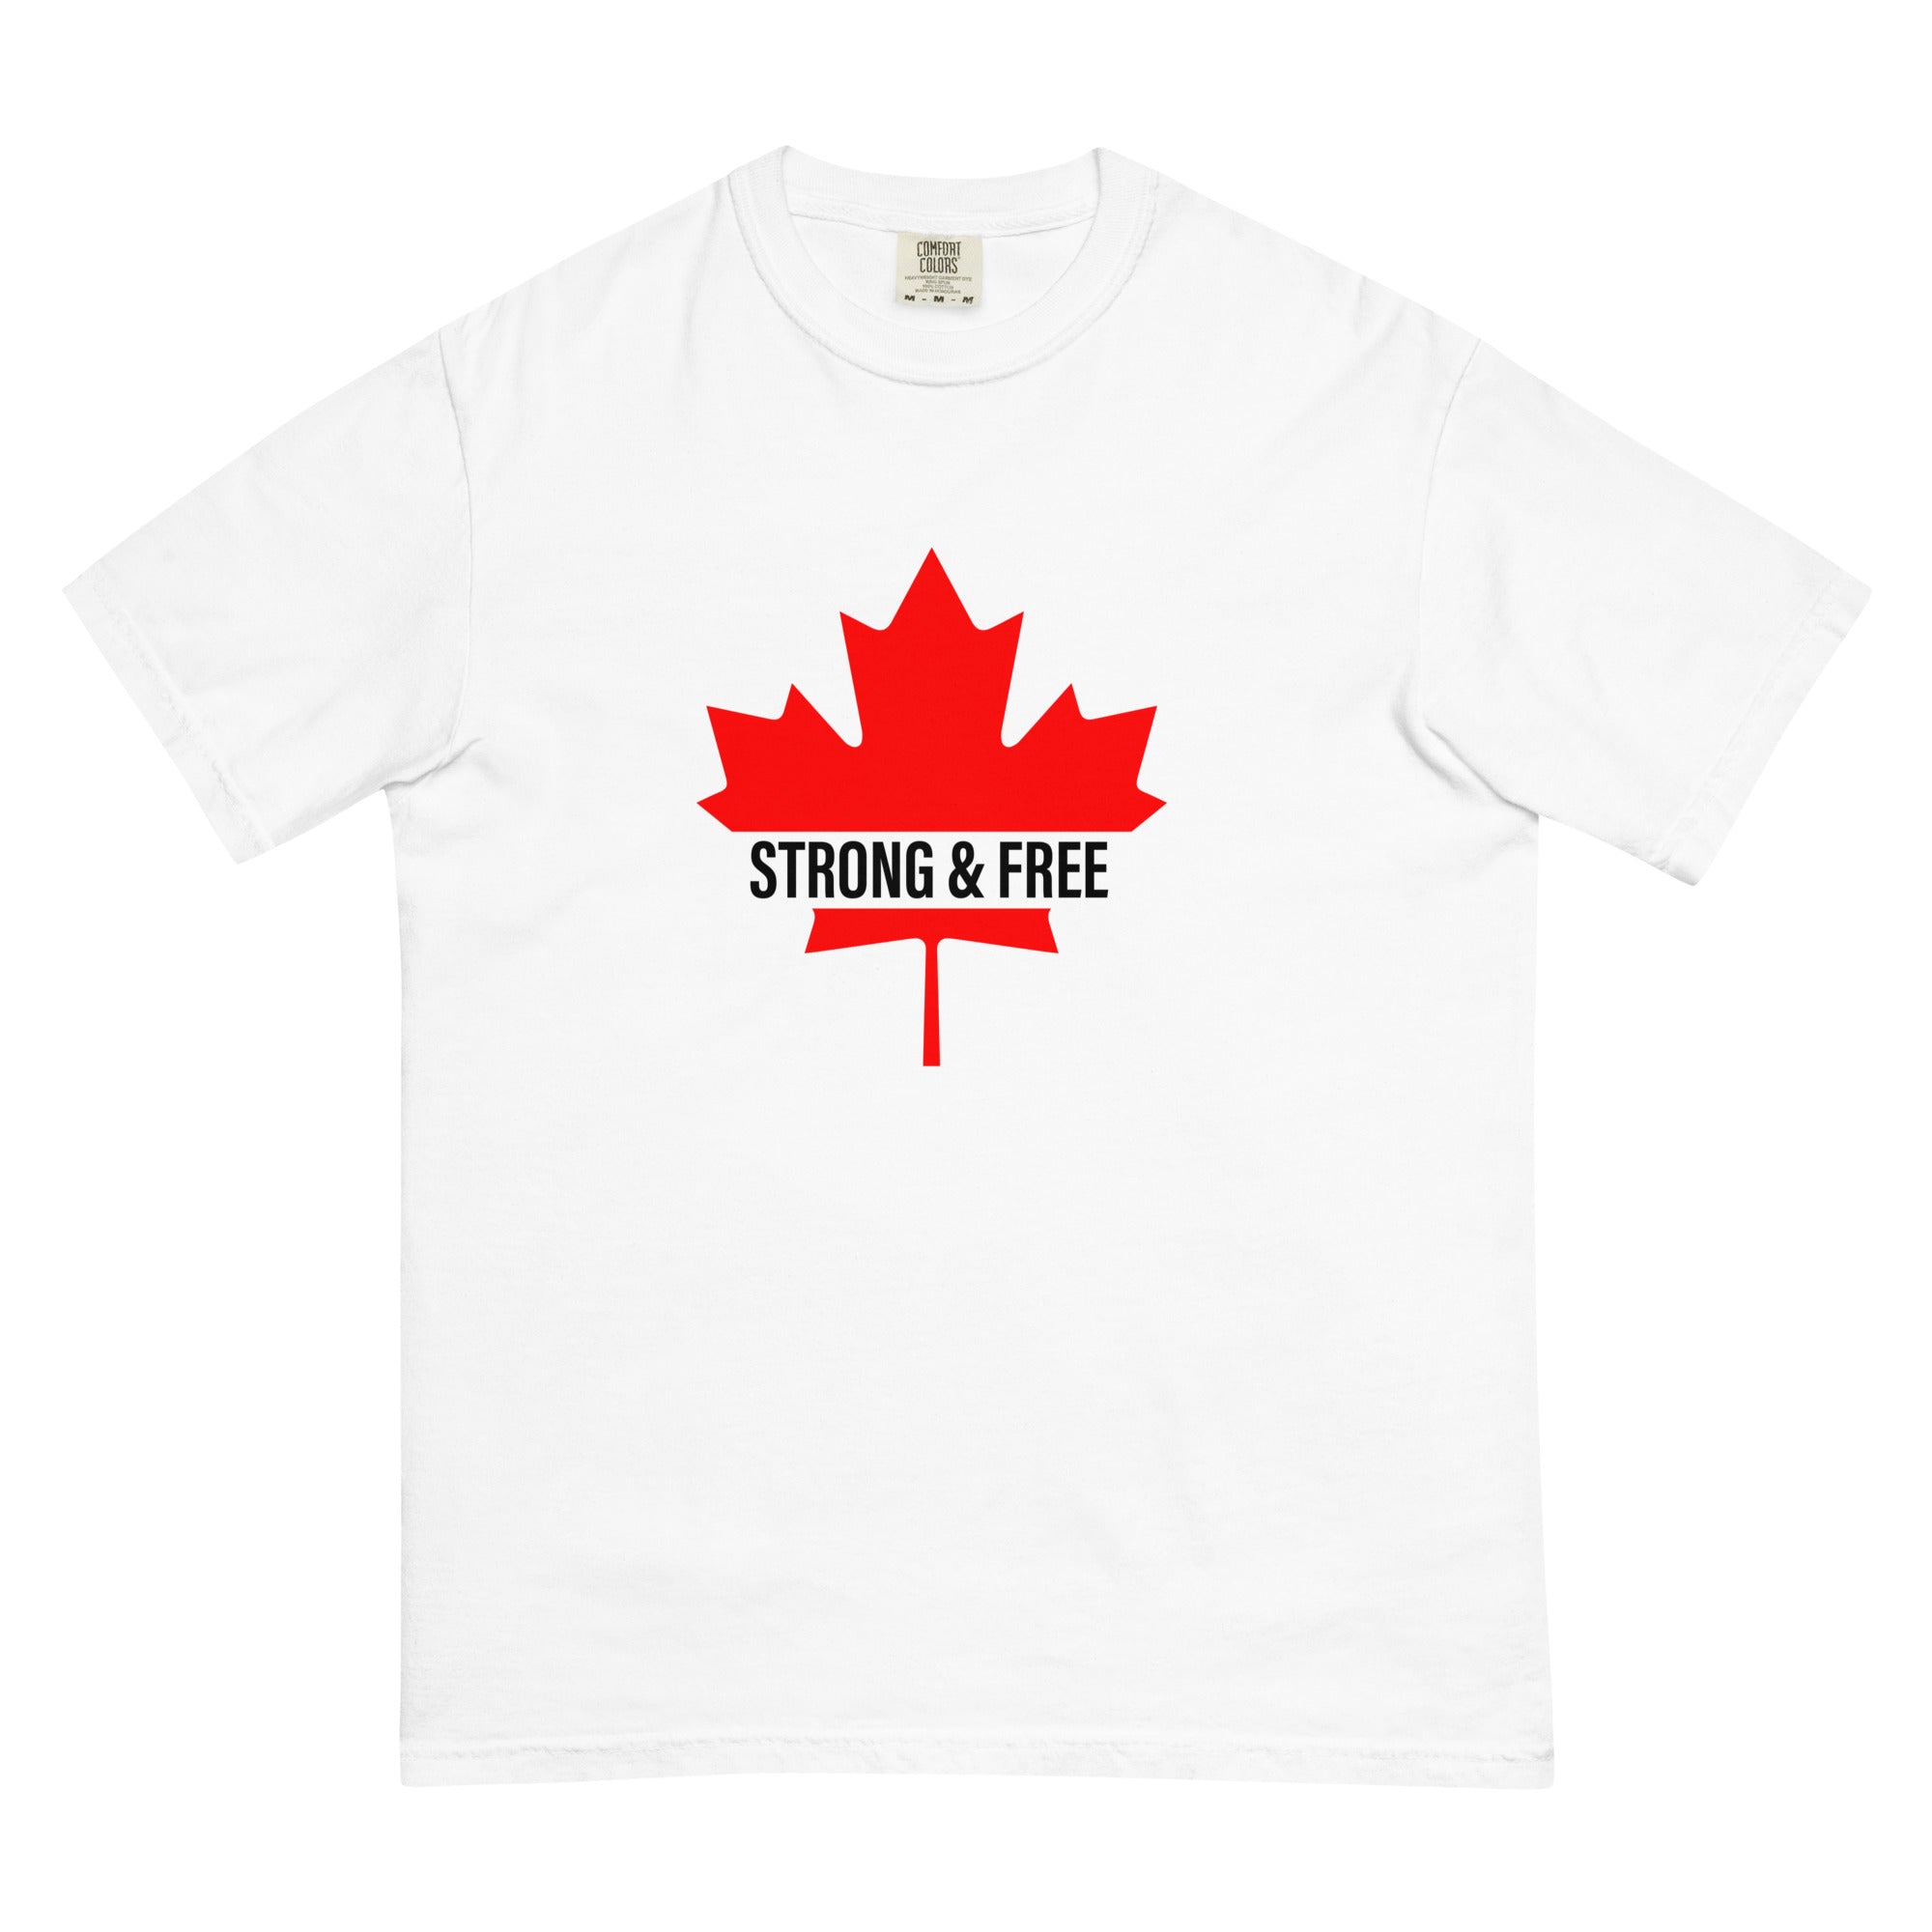 Men's "Strong & Free" T-shirt